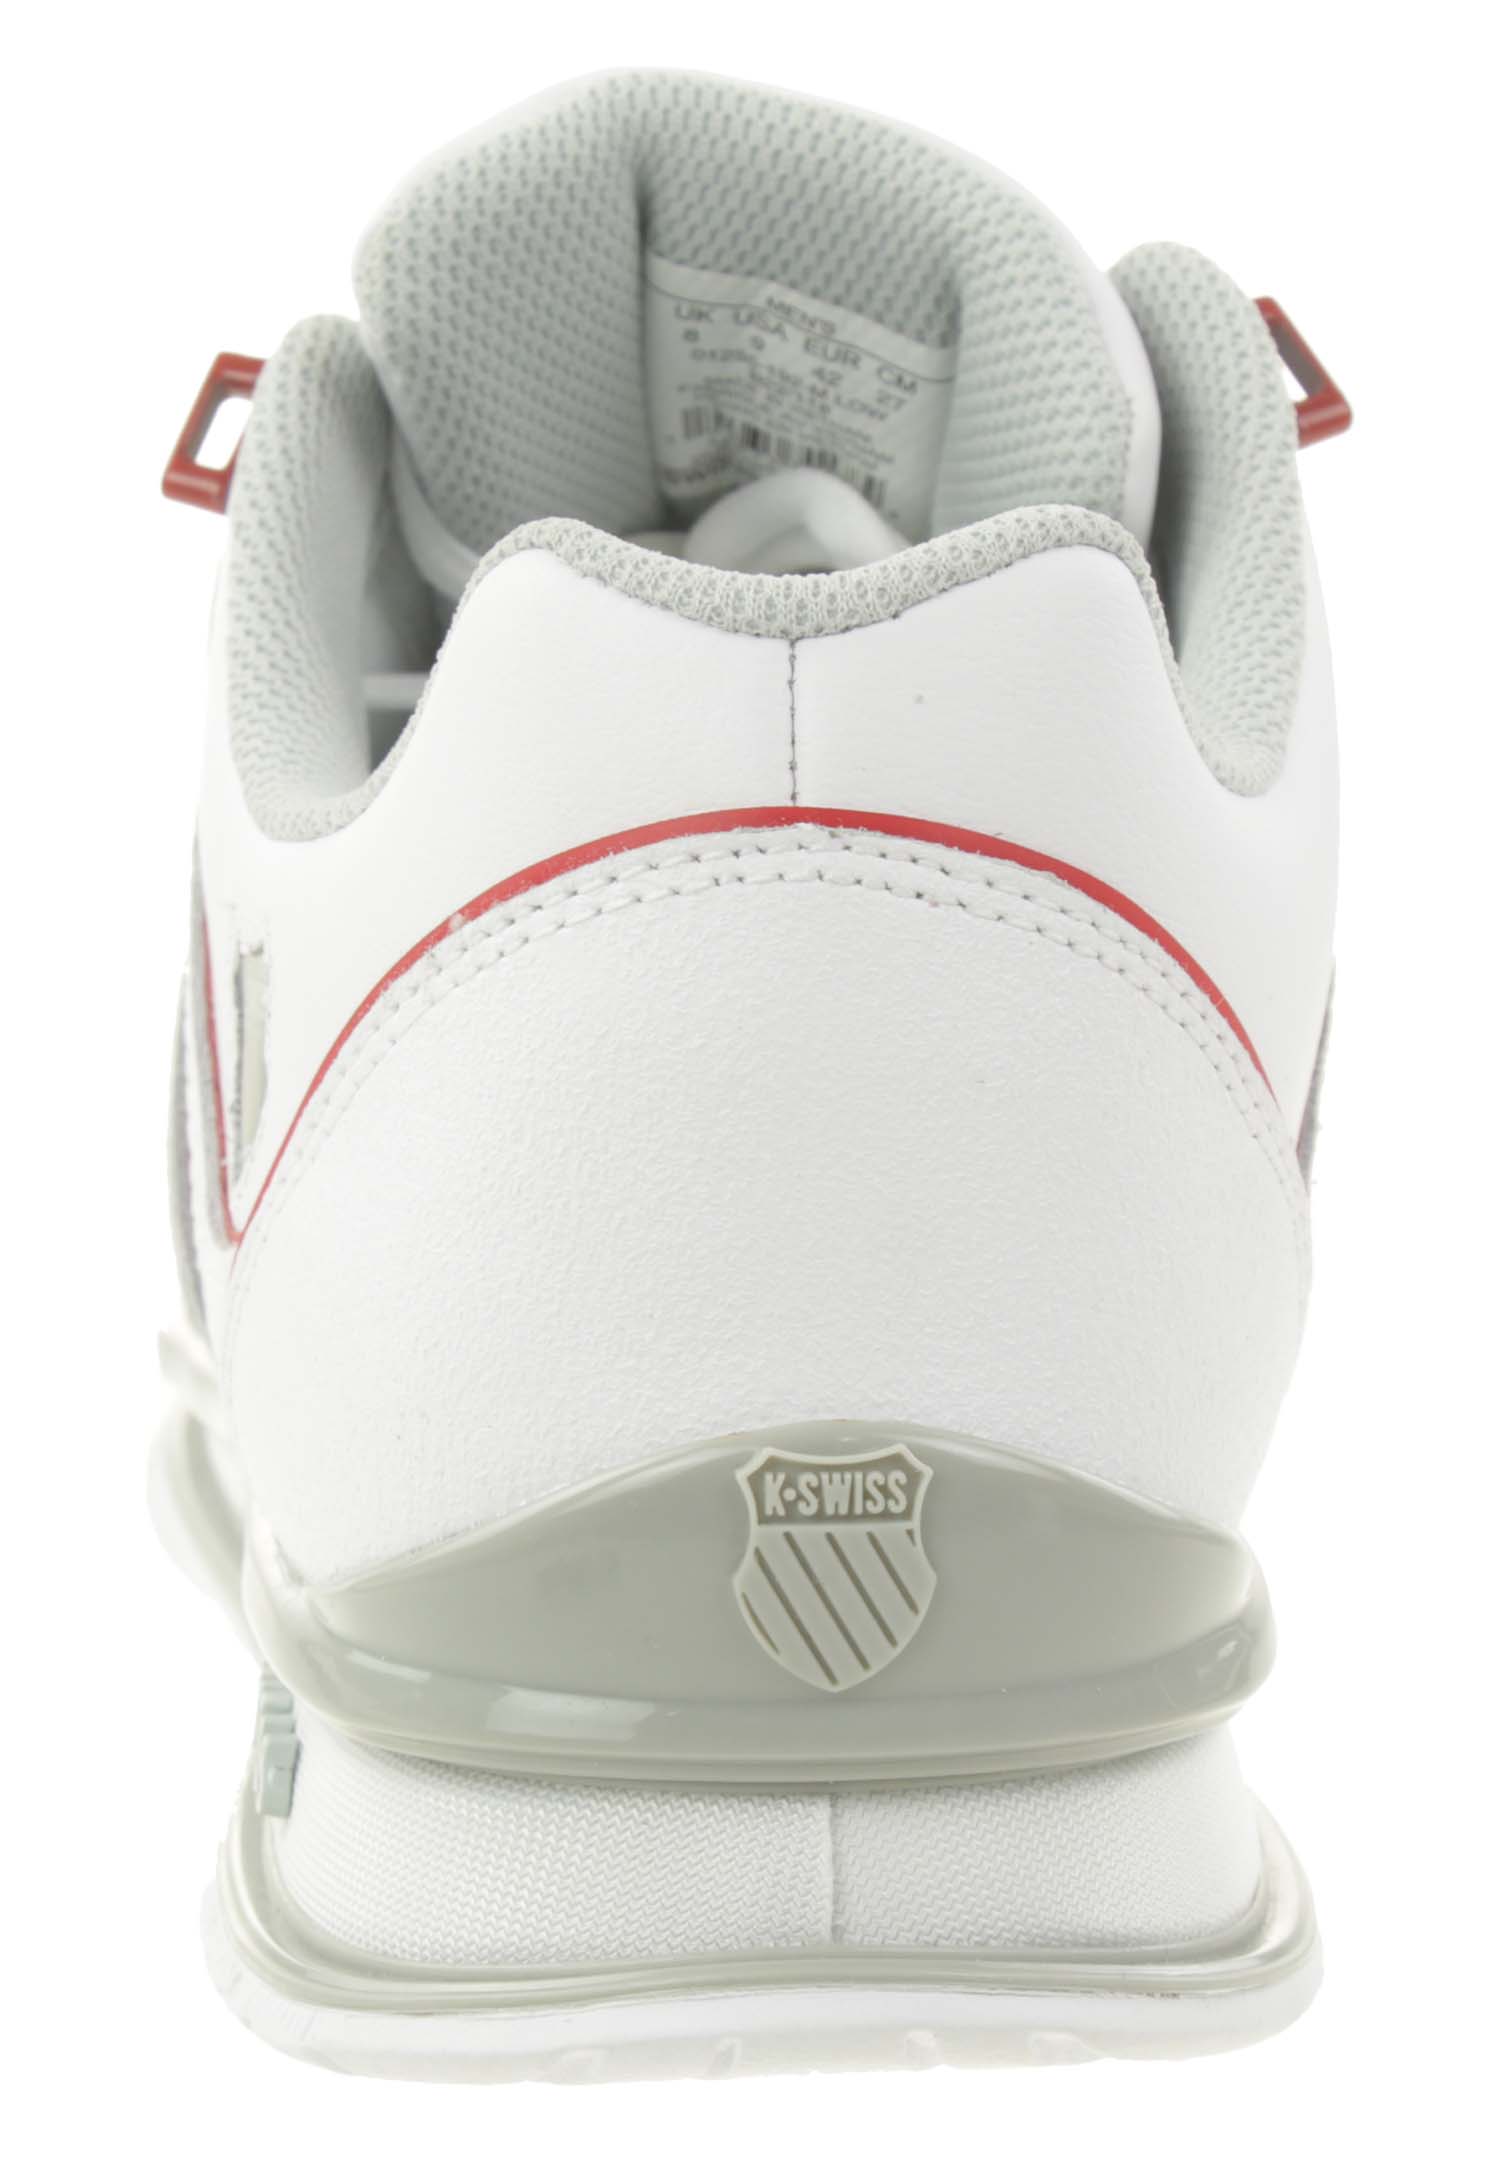 K-Swiss Rinzler Herren Sneaker Sportschuh 01235-192-M weiss rot